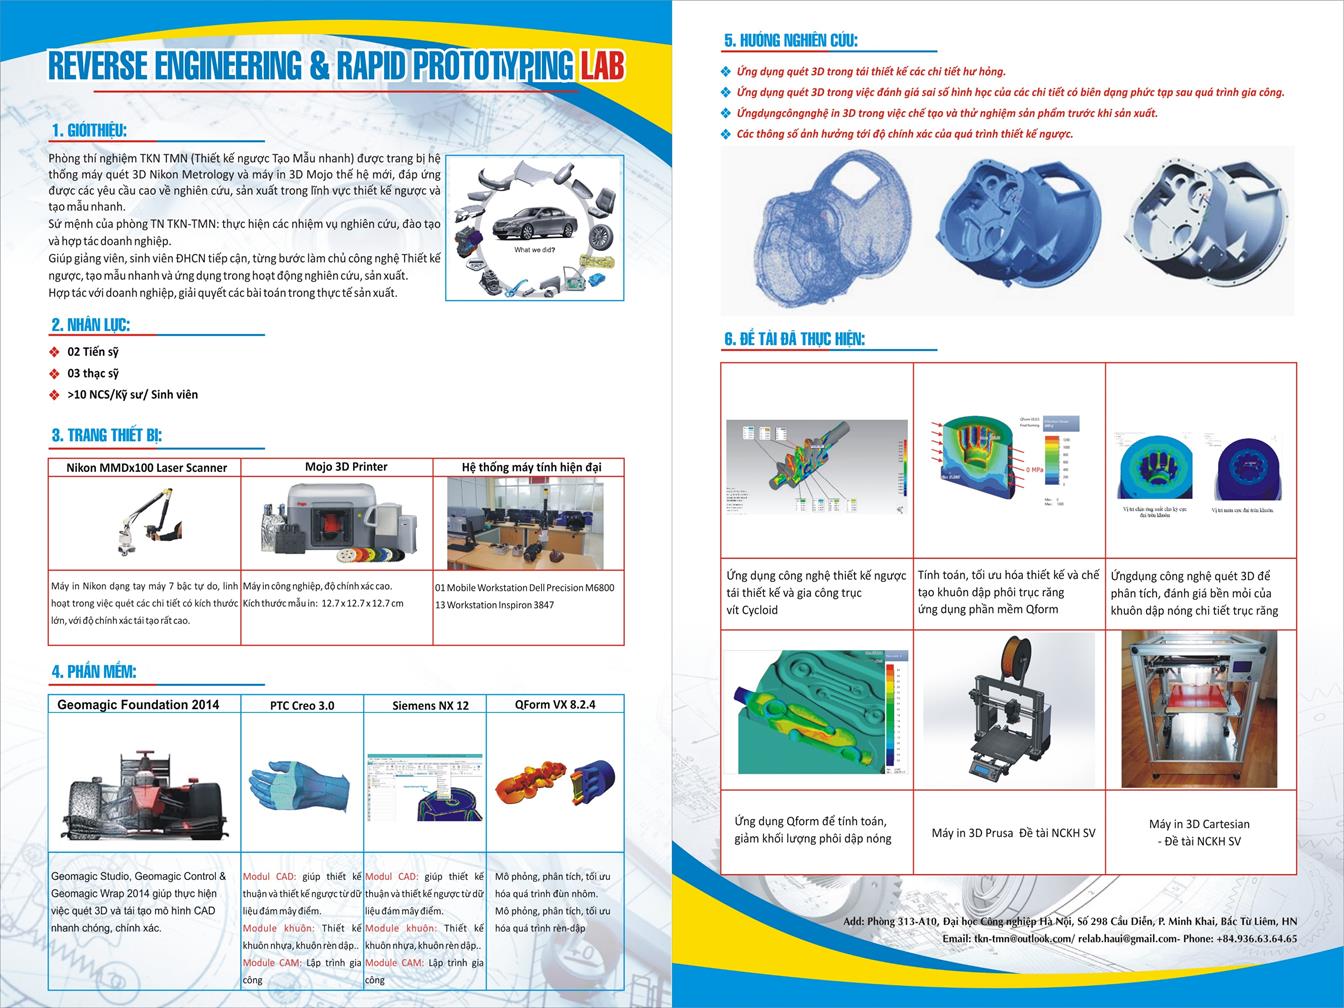 Reverse Engineering & Rapid Prototyping Laboratory